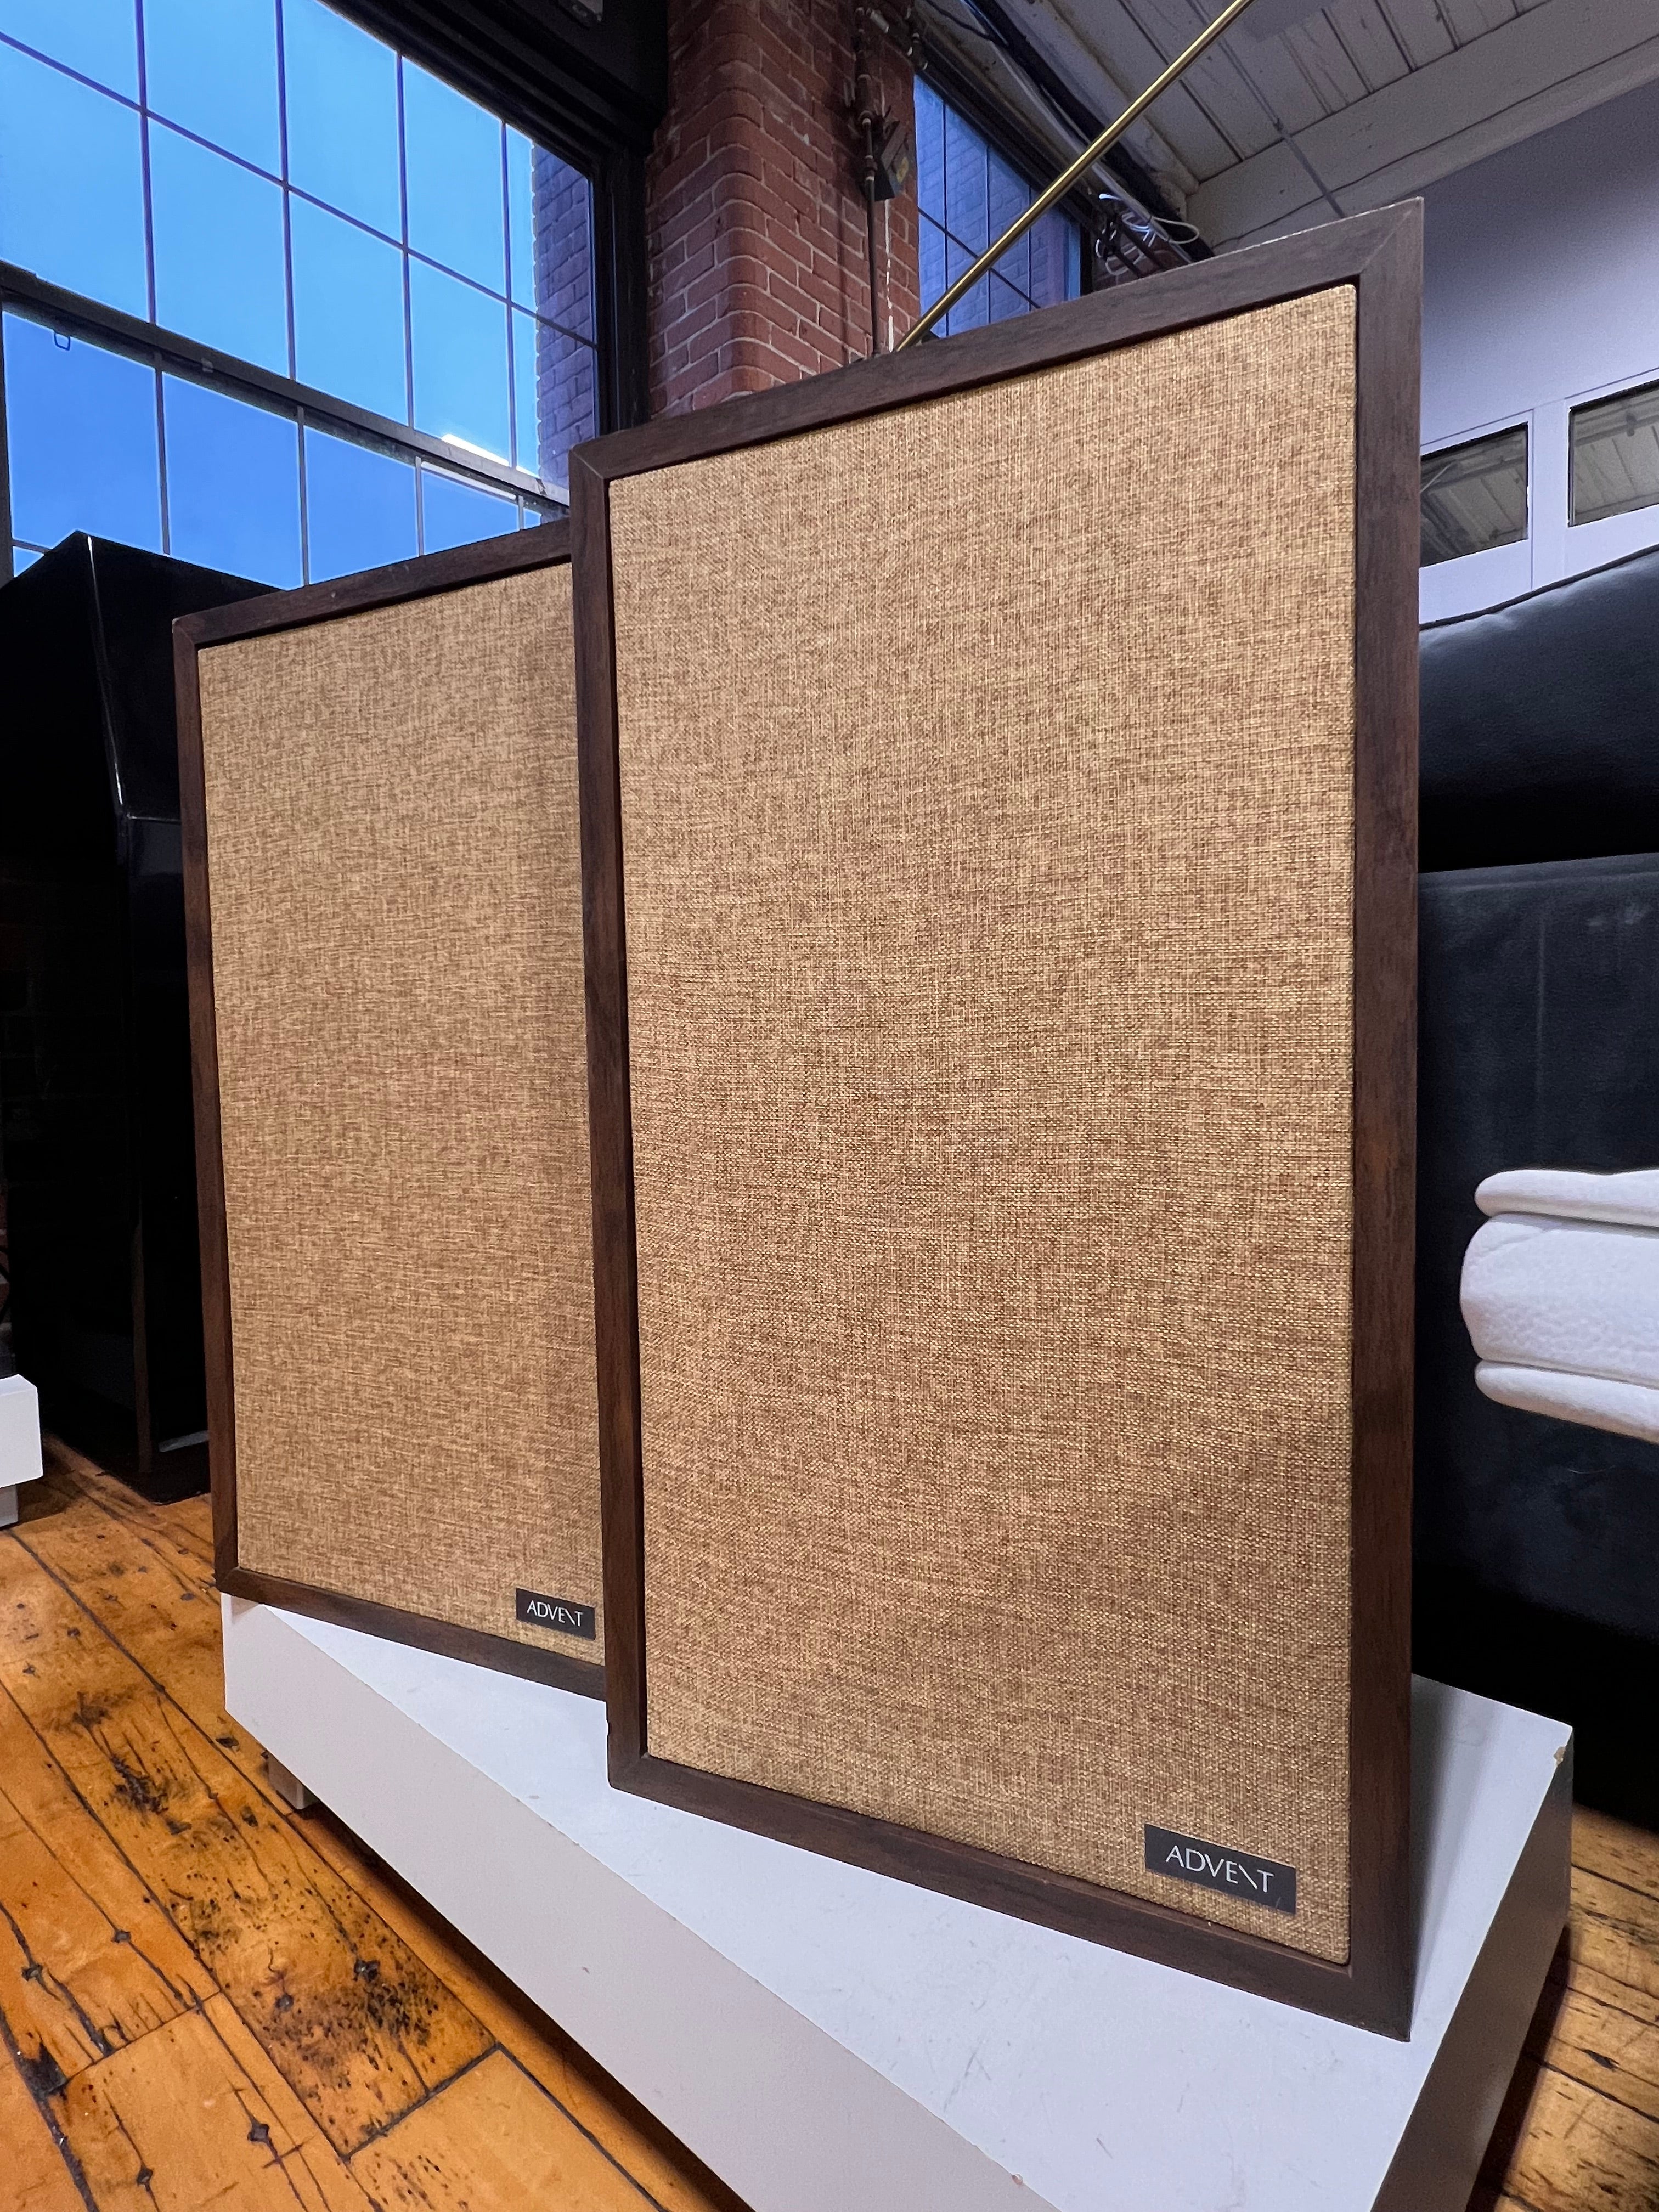 The "New" Advent Loudspeaker, Utility Cabinets, Simulated Wood Veneer